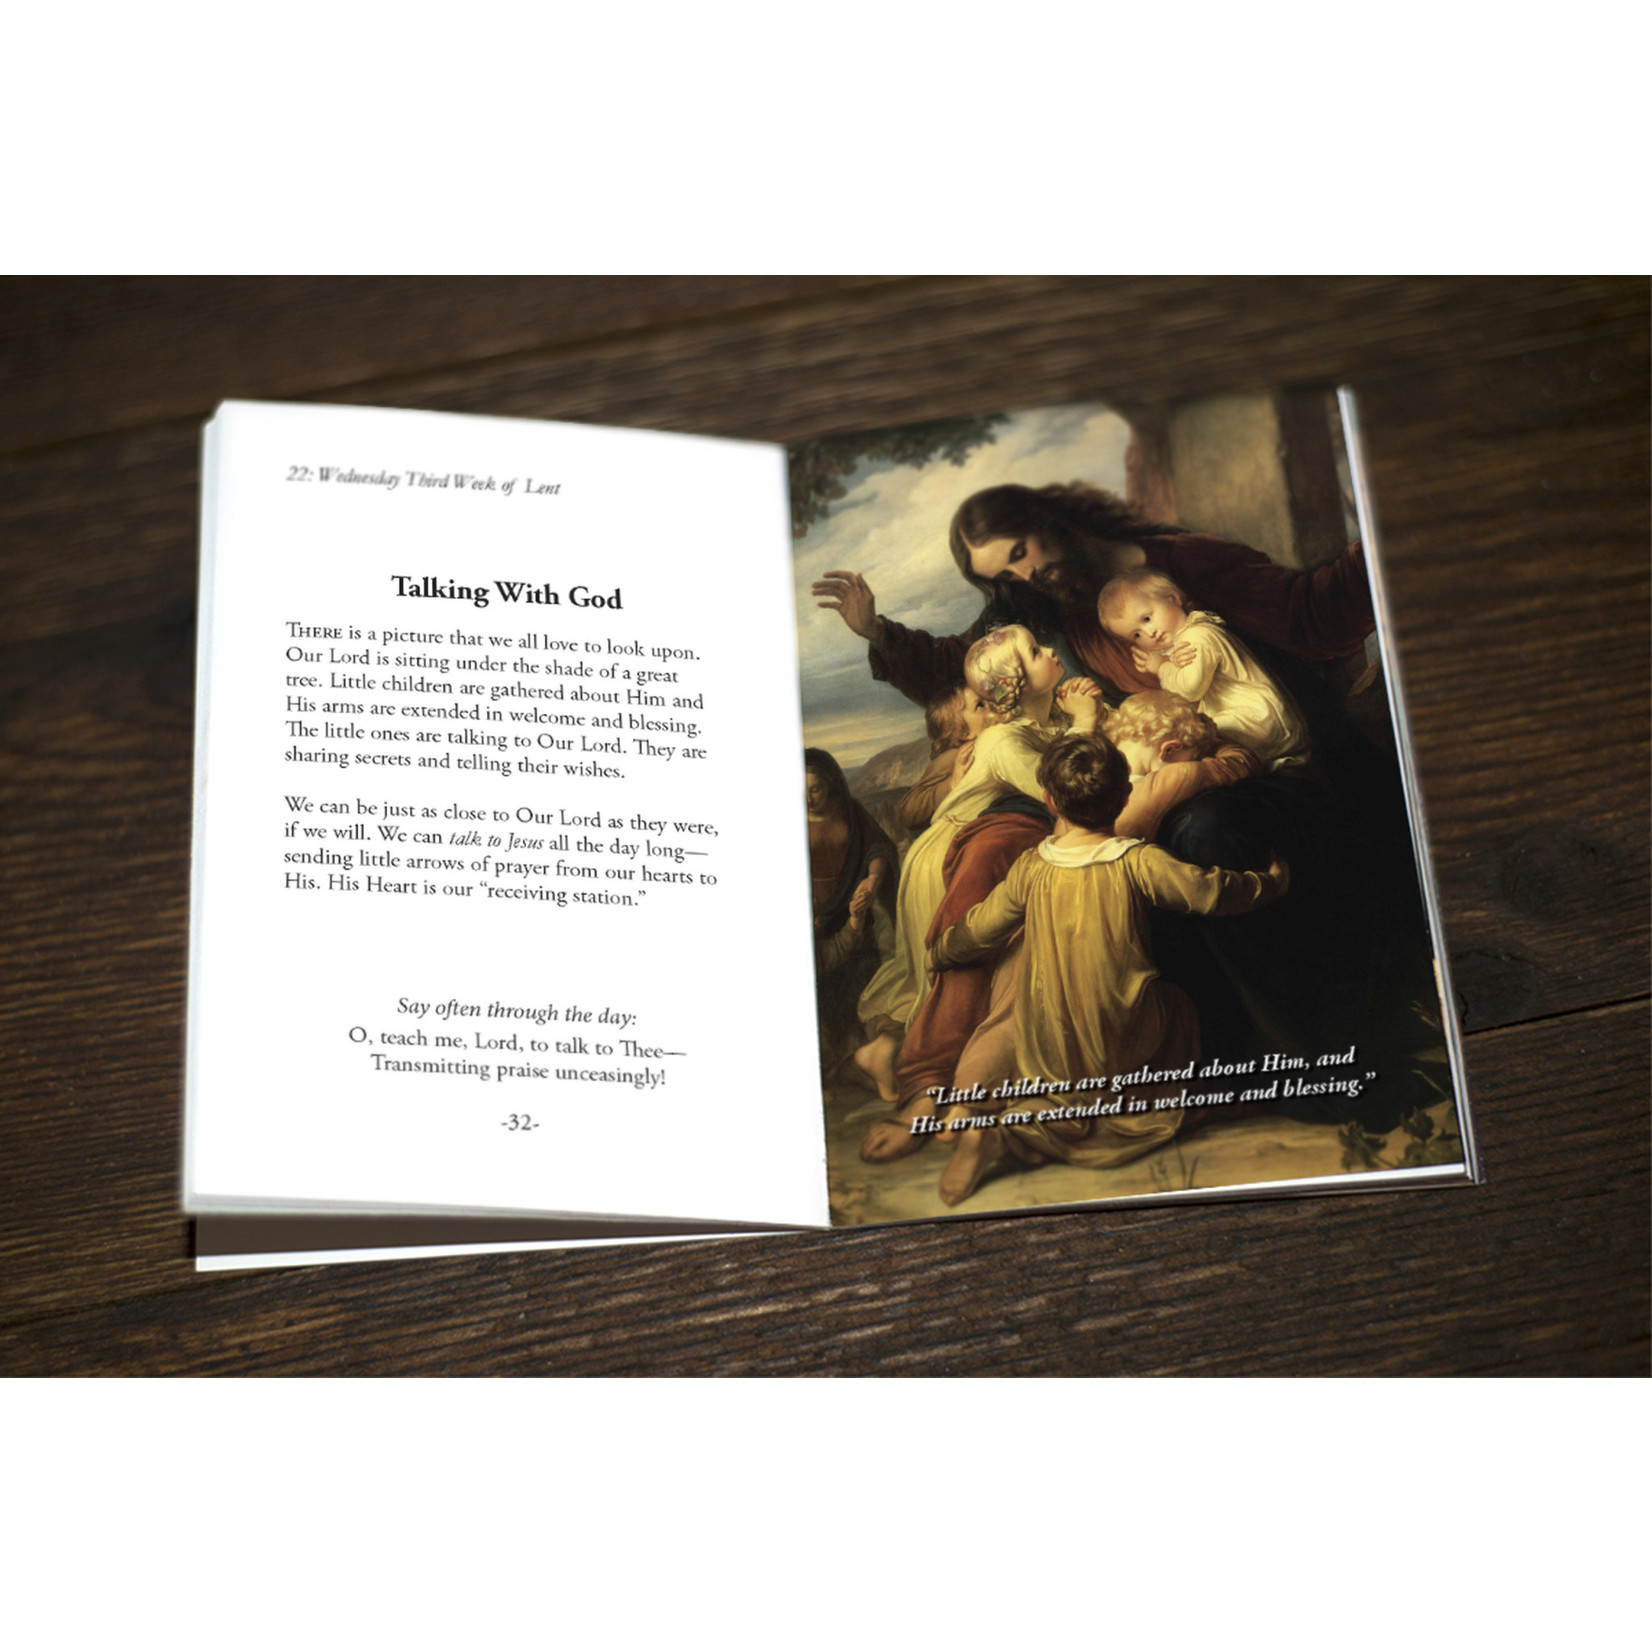 Lent for Children Booklet